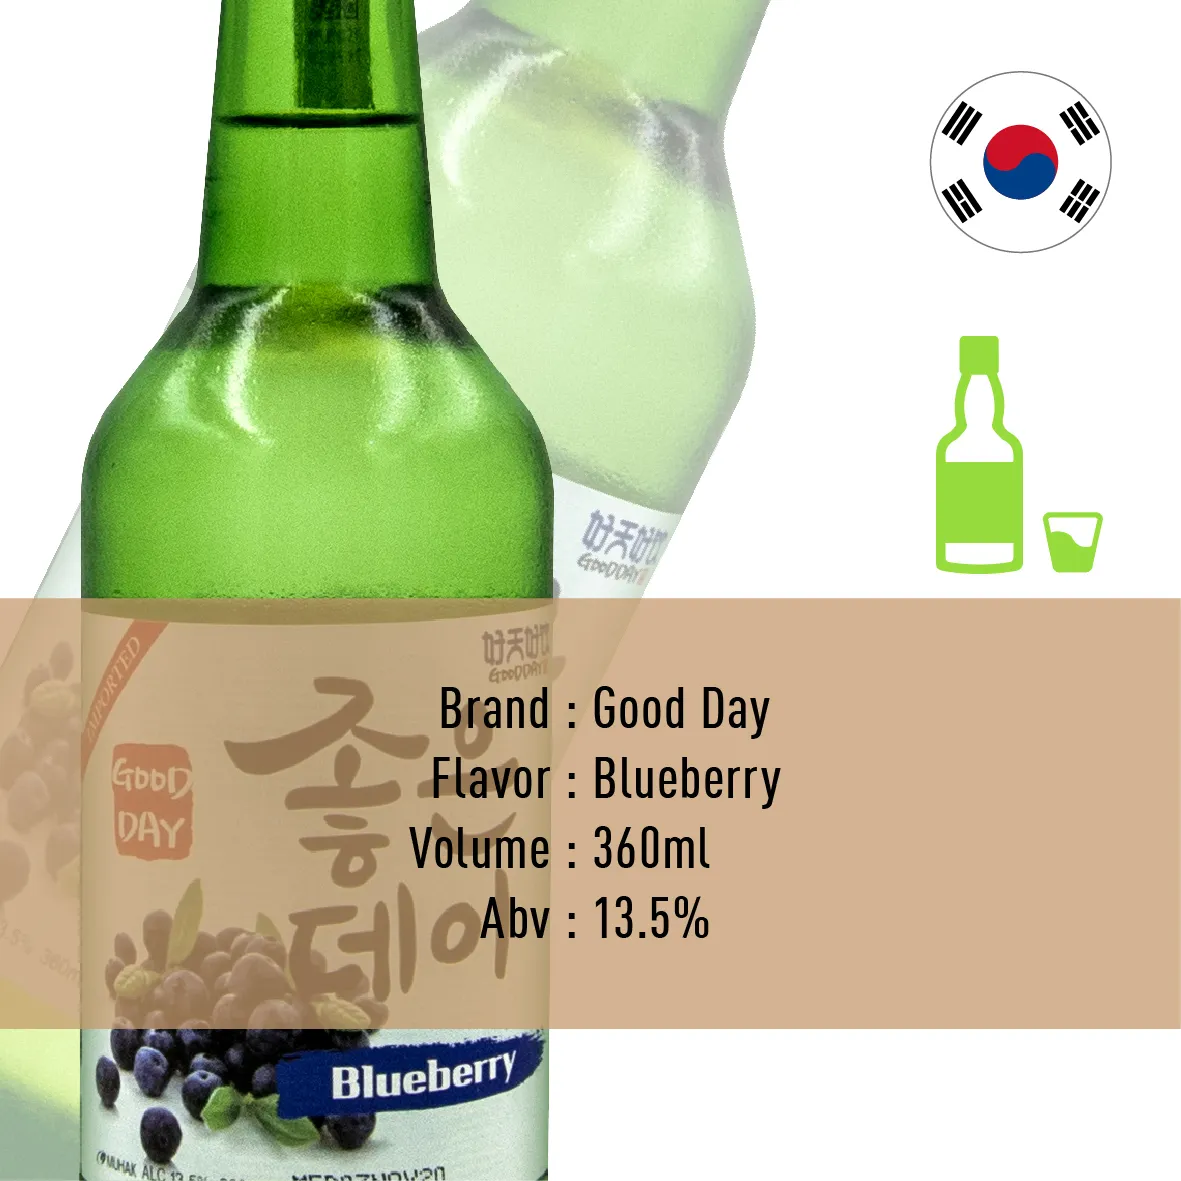 13-GooddaySoju-Blueberry-Korea-02.jpg